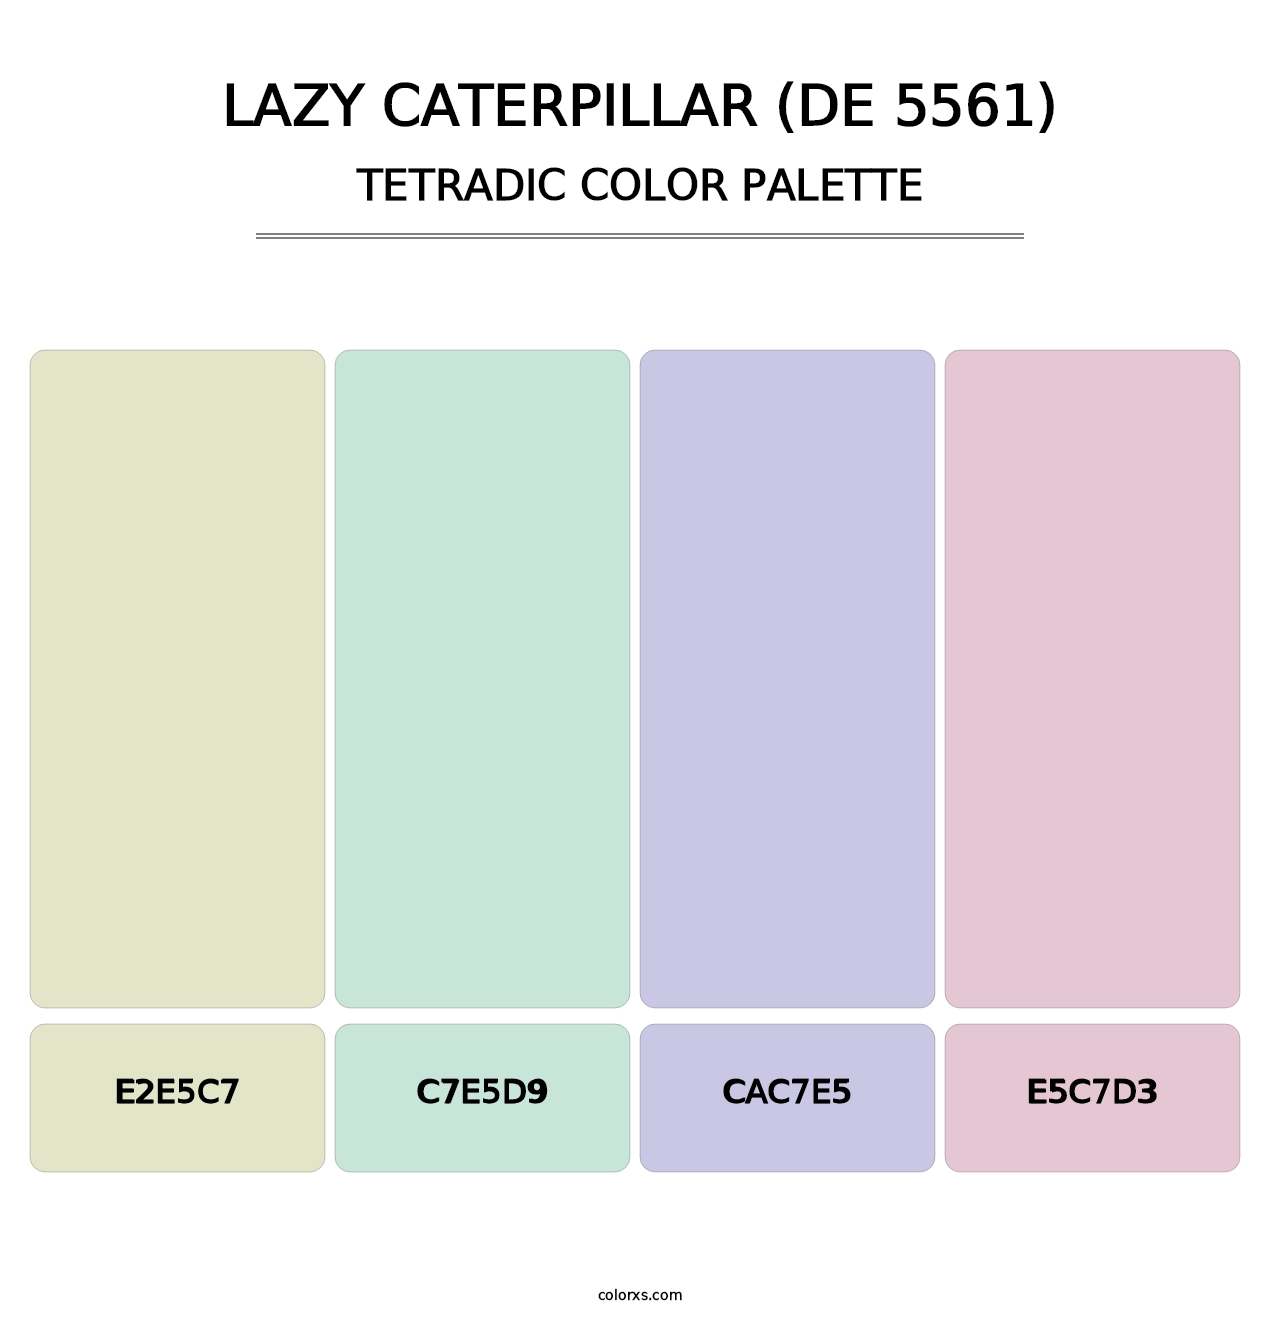 Lazy Caterpillar (DE 5561) - Tetradic Color Palette